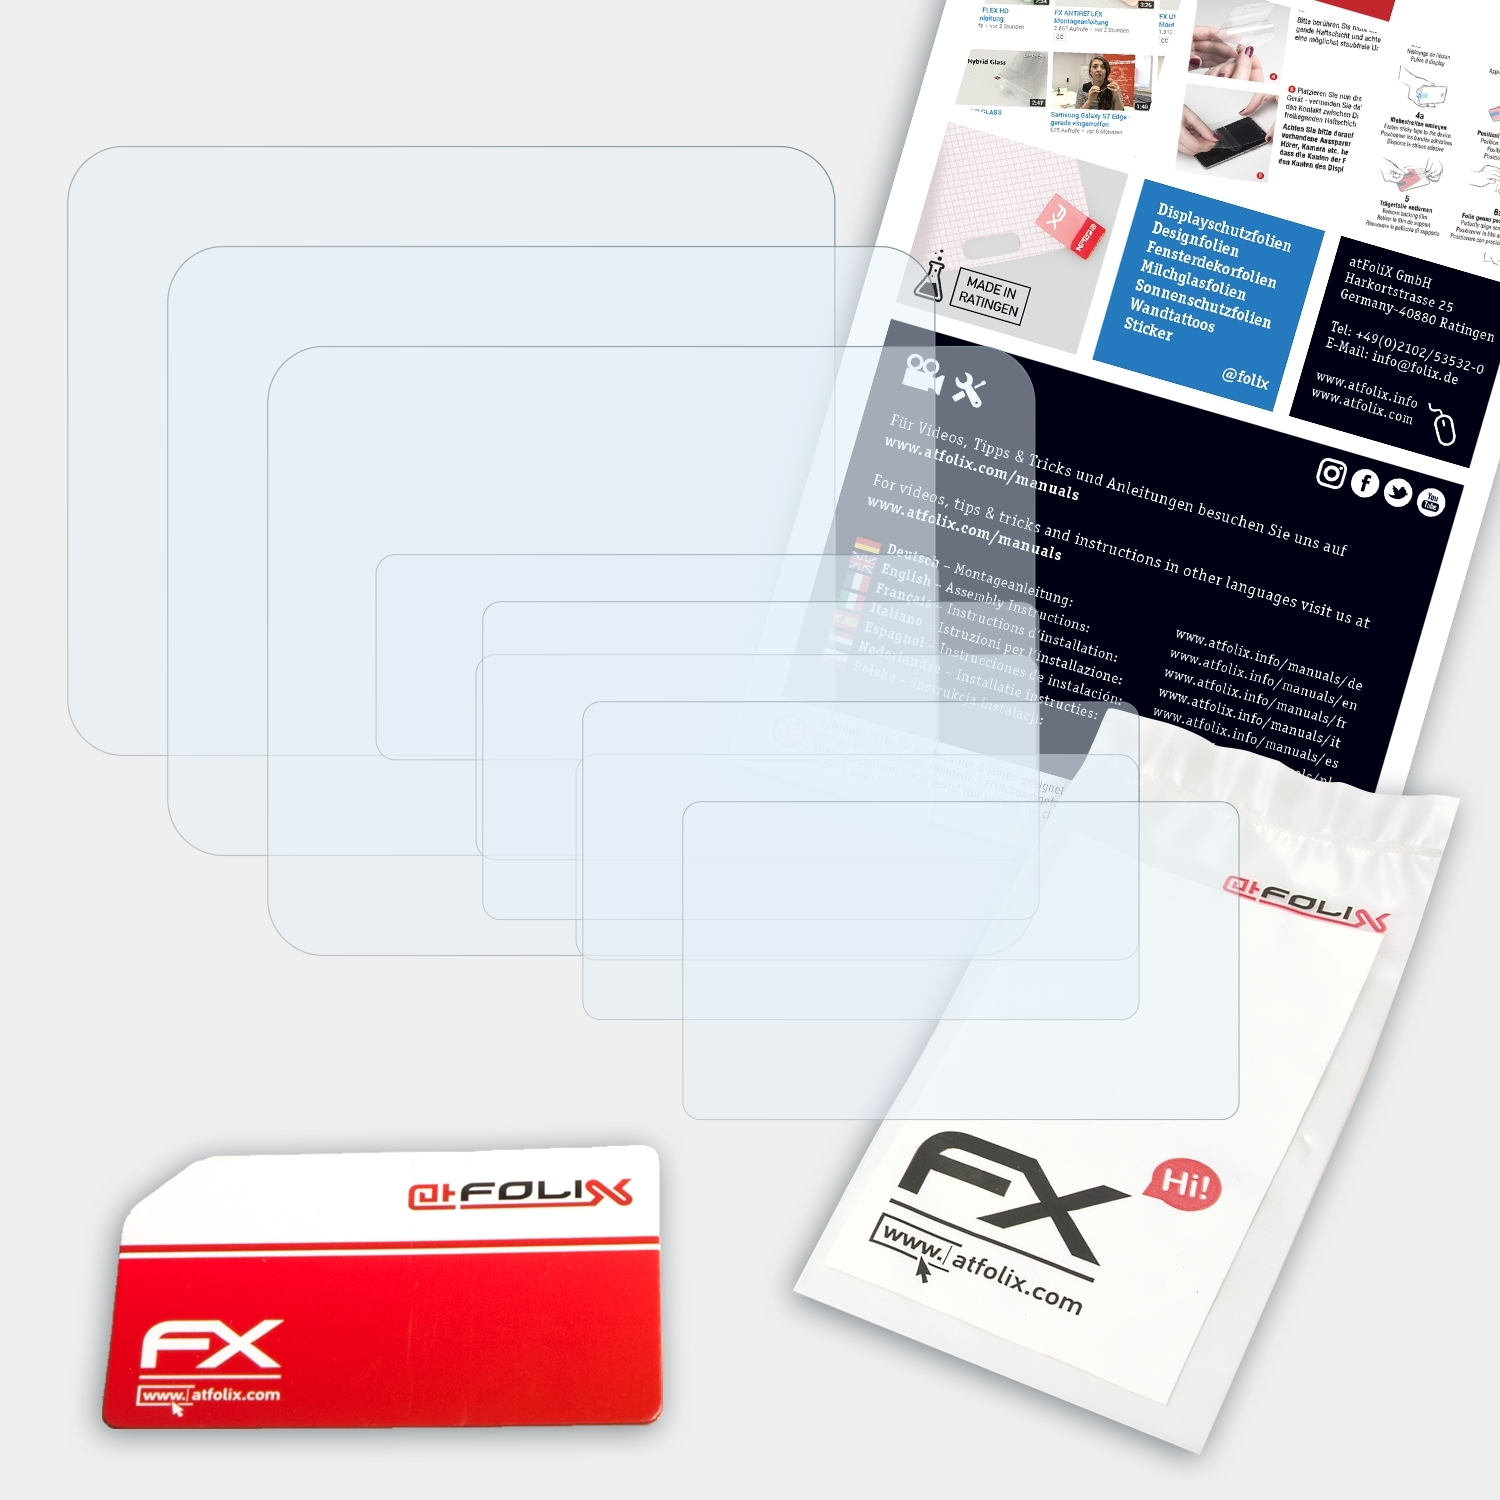 ATFOLIX 3x FX-Clear S3 FinePix Pro) Fujifilm Displayschutz(für